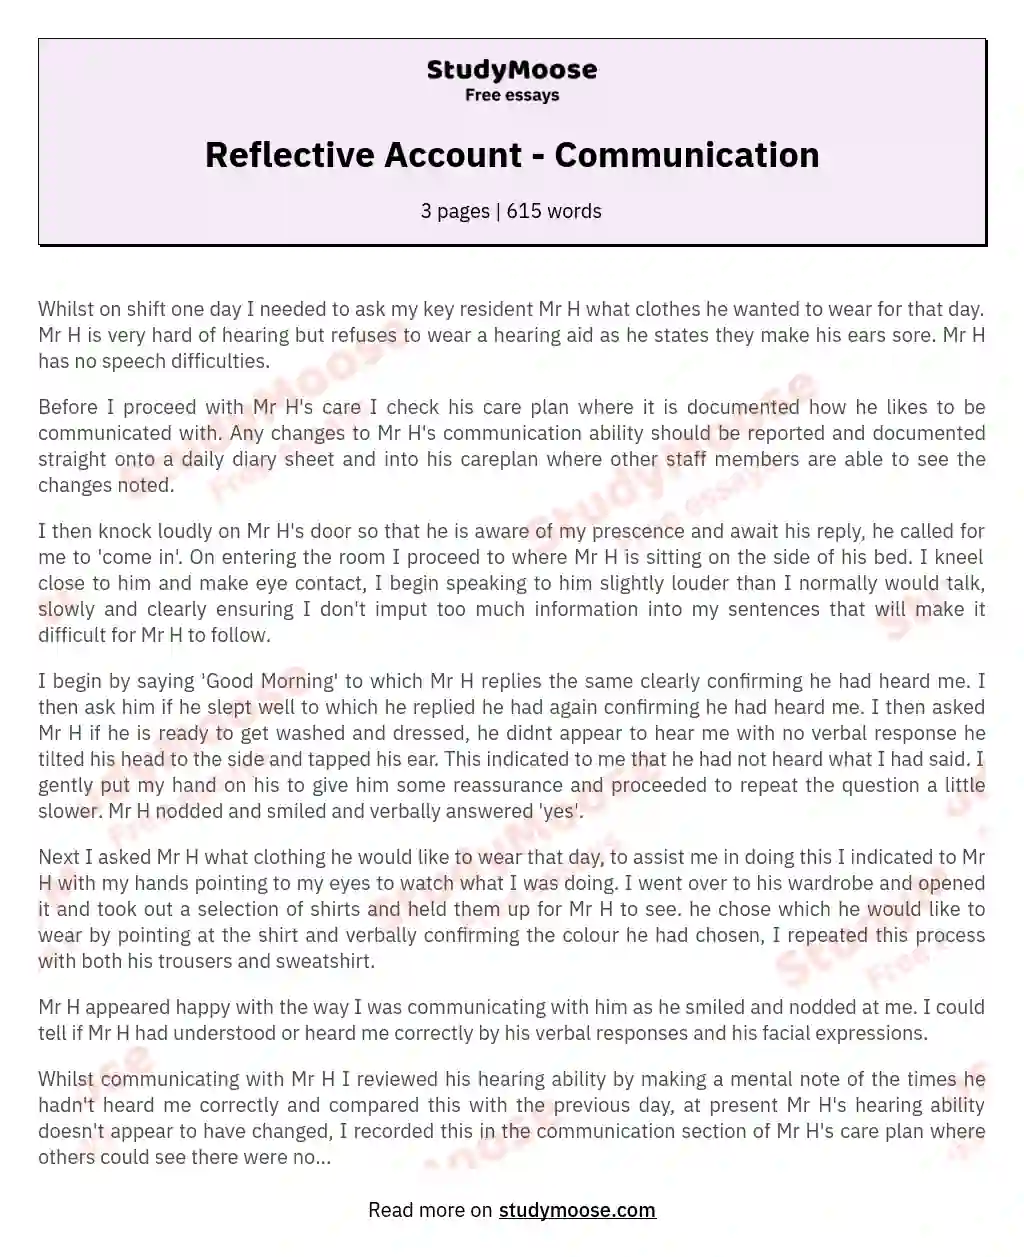 Reflective Account - Communication essay